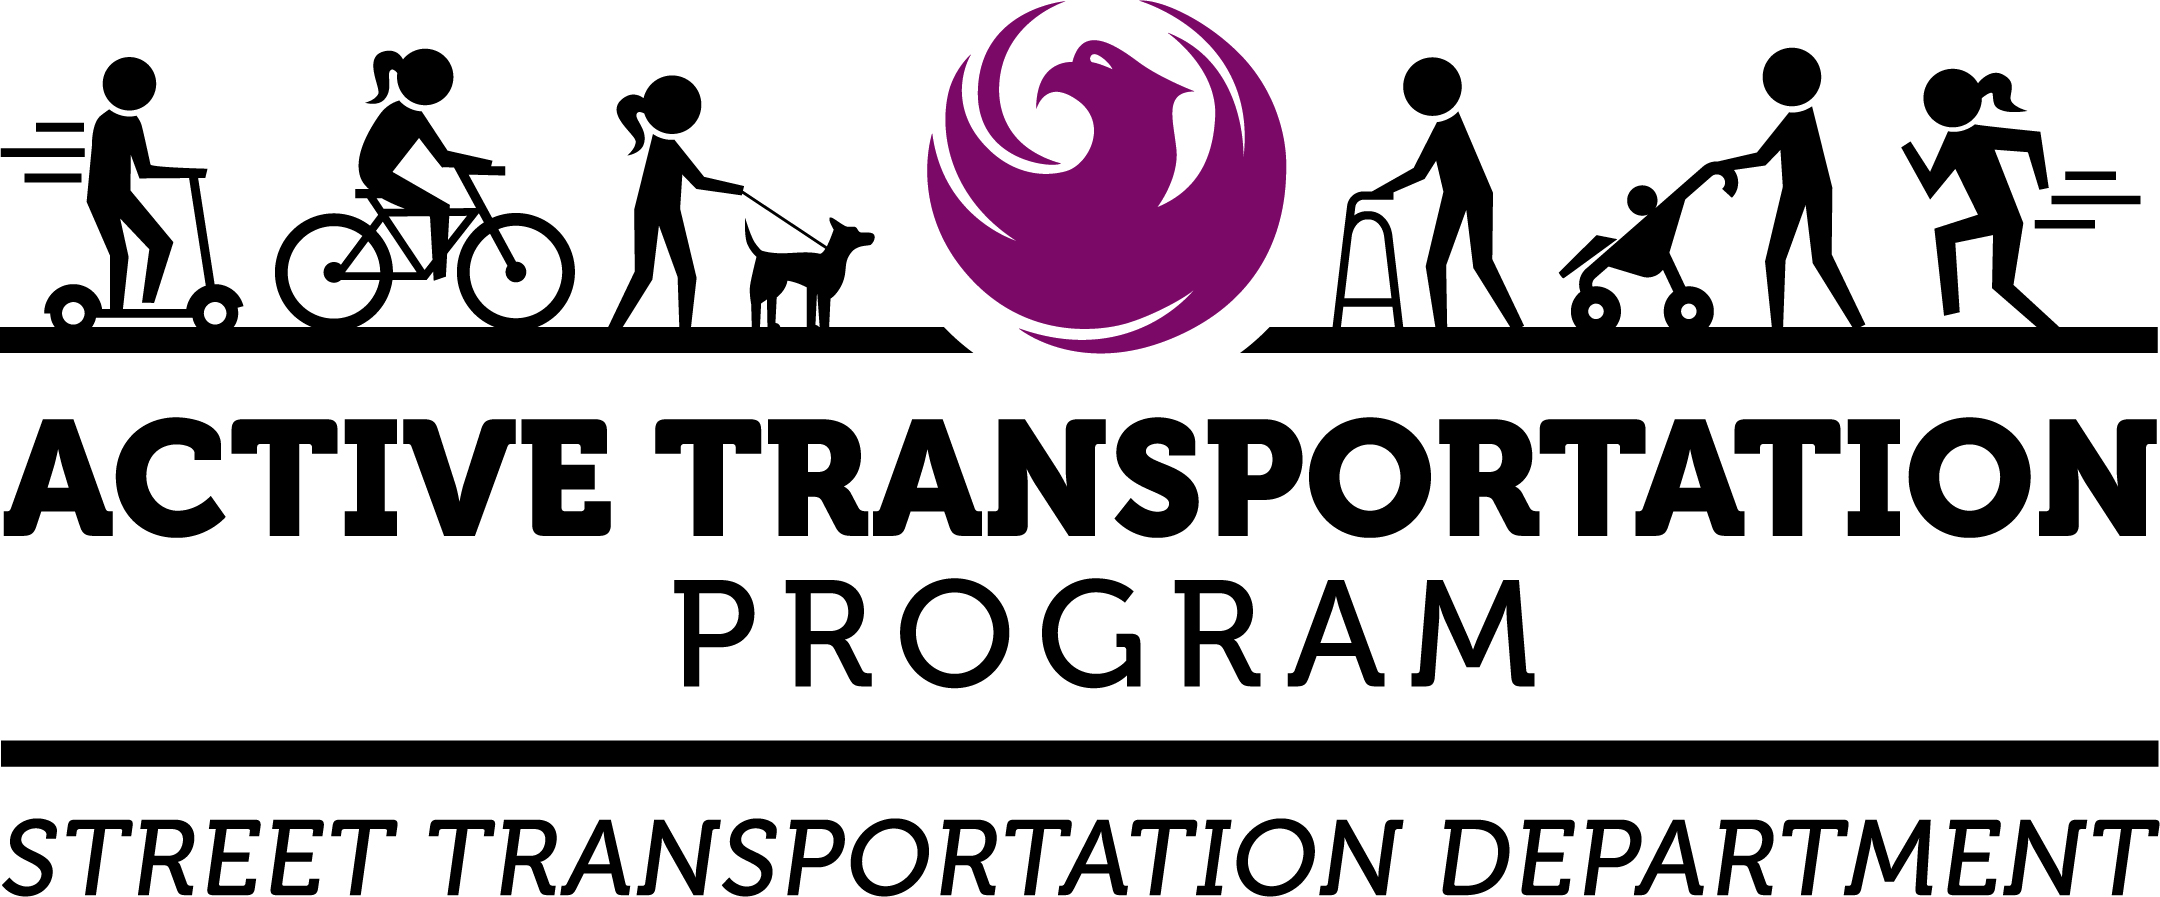 Active Transportation Program Logo-horizontal-color.jpg